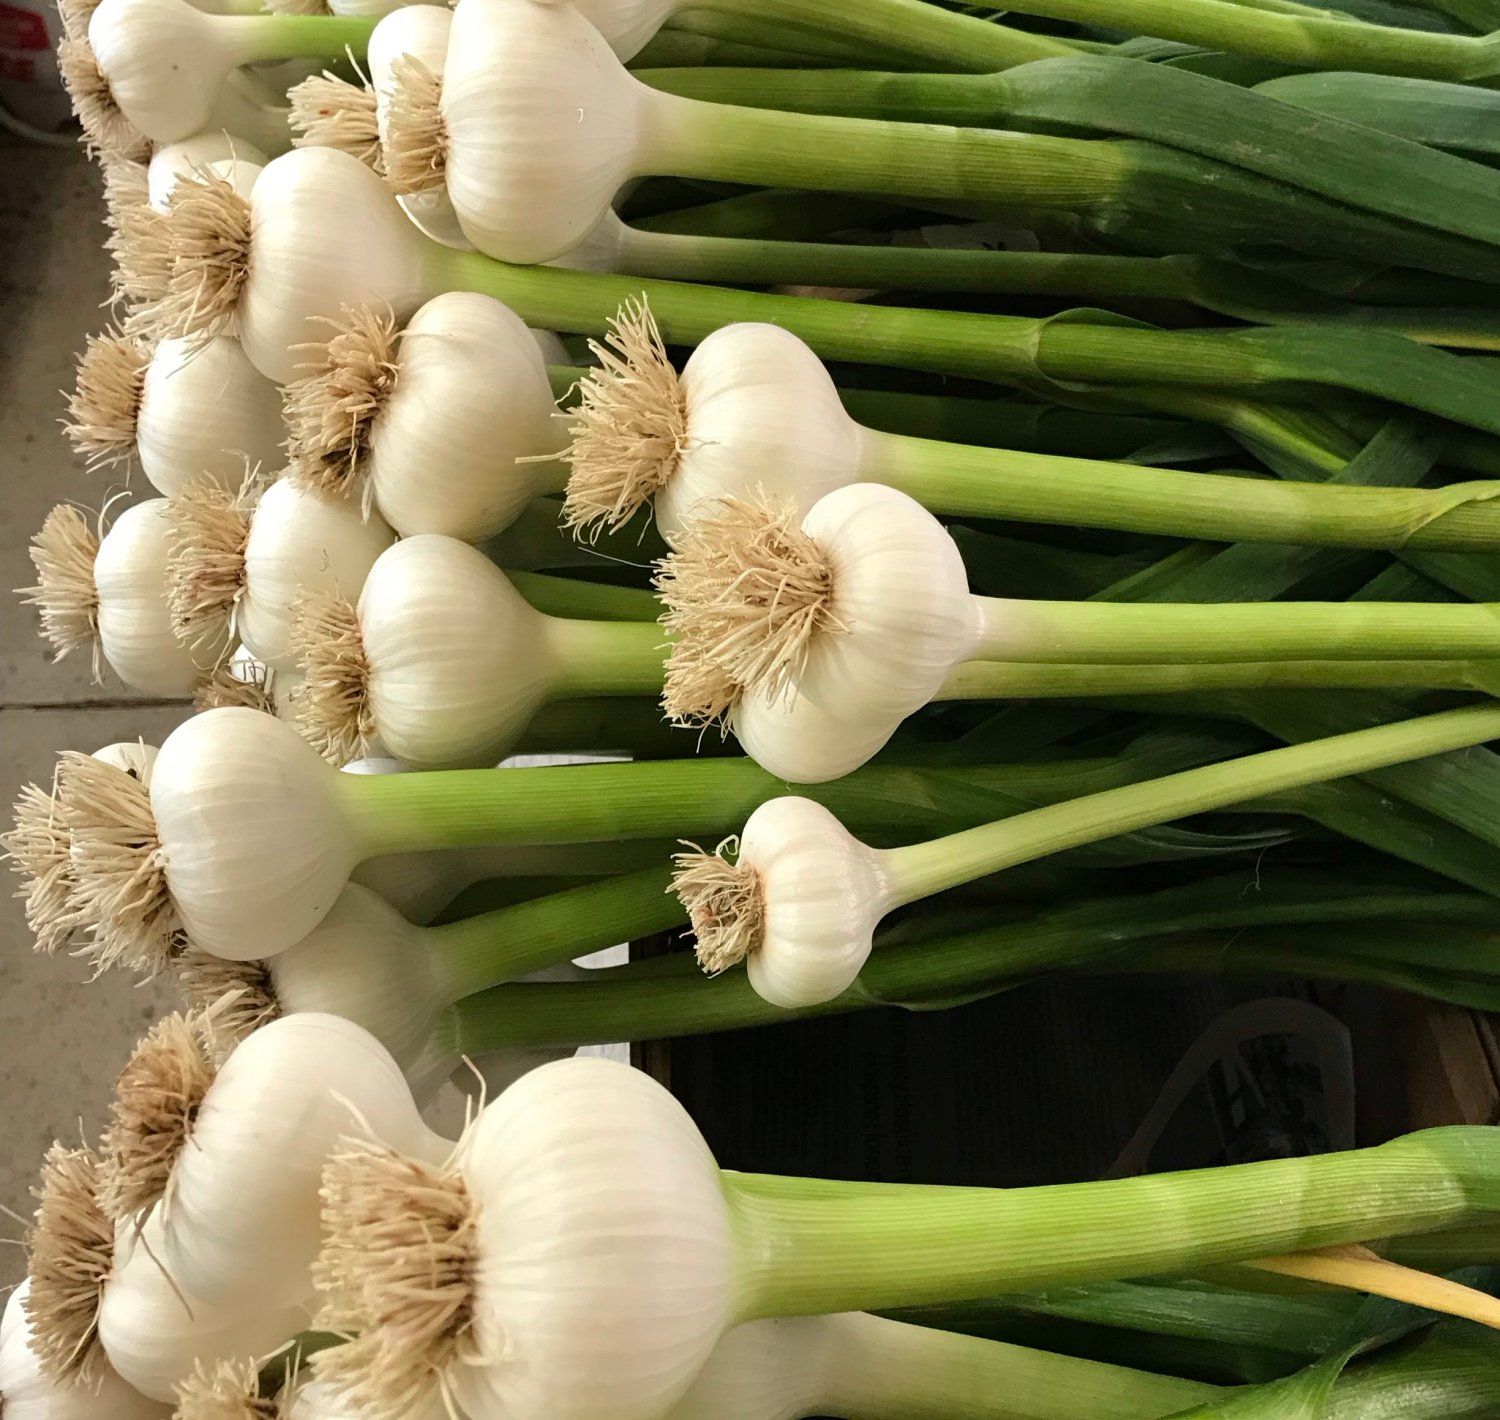 Next Happening: Fresh Garlic Is Here!